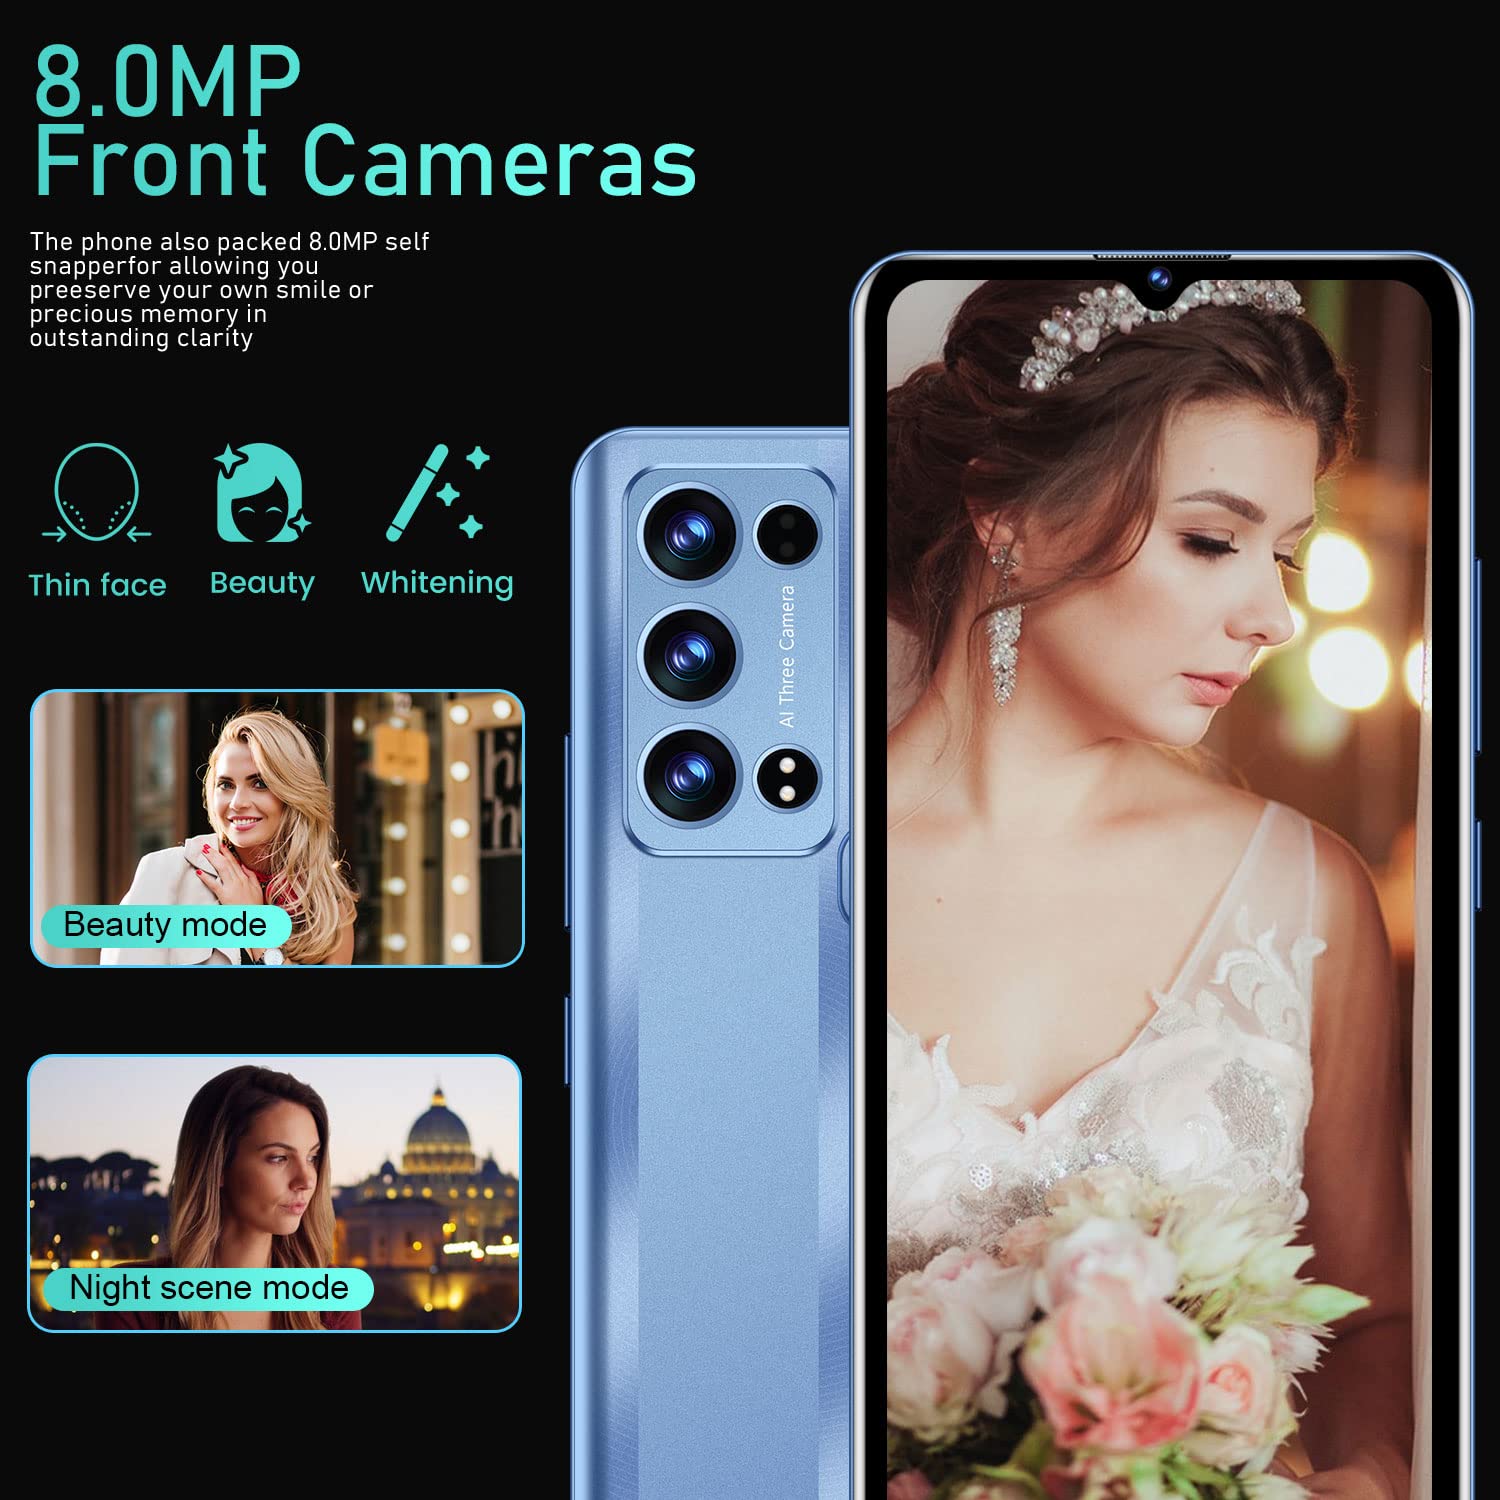 GAMAKOO K50 Unlocked Cell Phones 128GB+4GB 6.53” HD+ Screen Dual SIM Octa Core 5380mAh Battery 4G Android Smartphone (Blue)